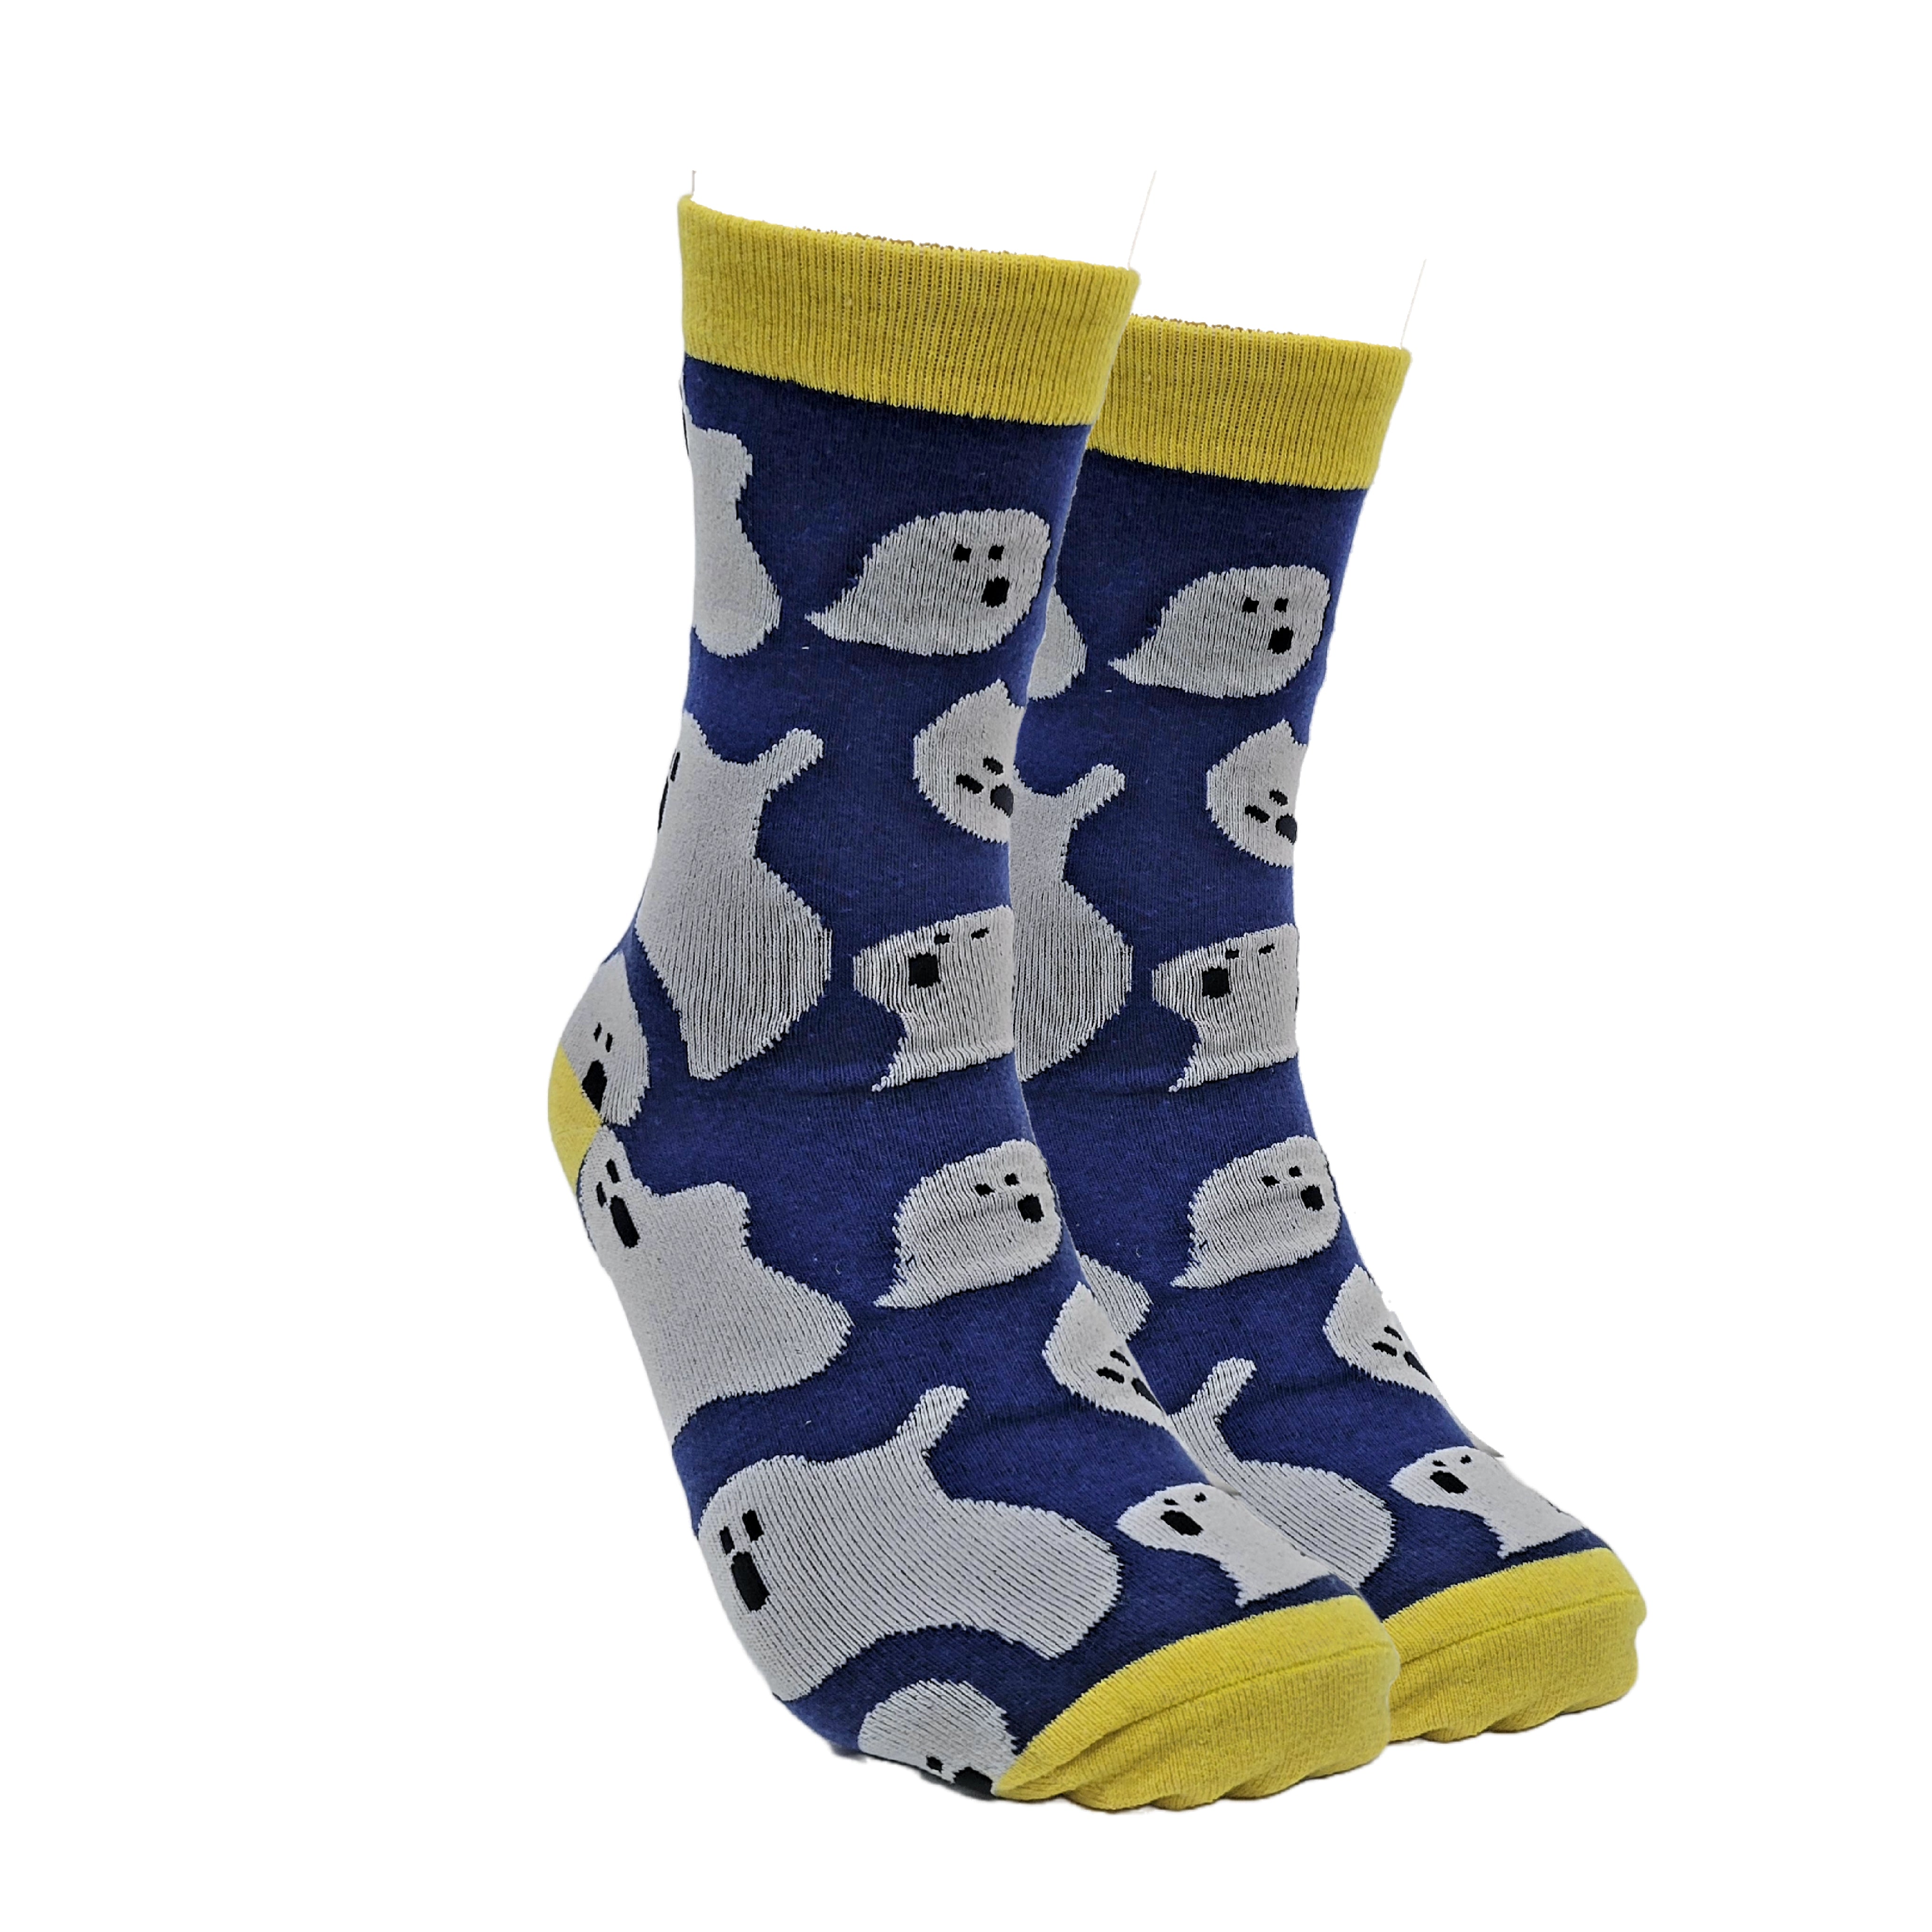 Ghost Socks Women Sock Size 9-11 (Adult Medium)